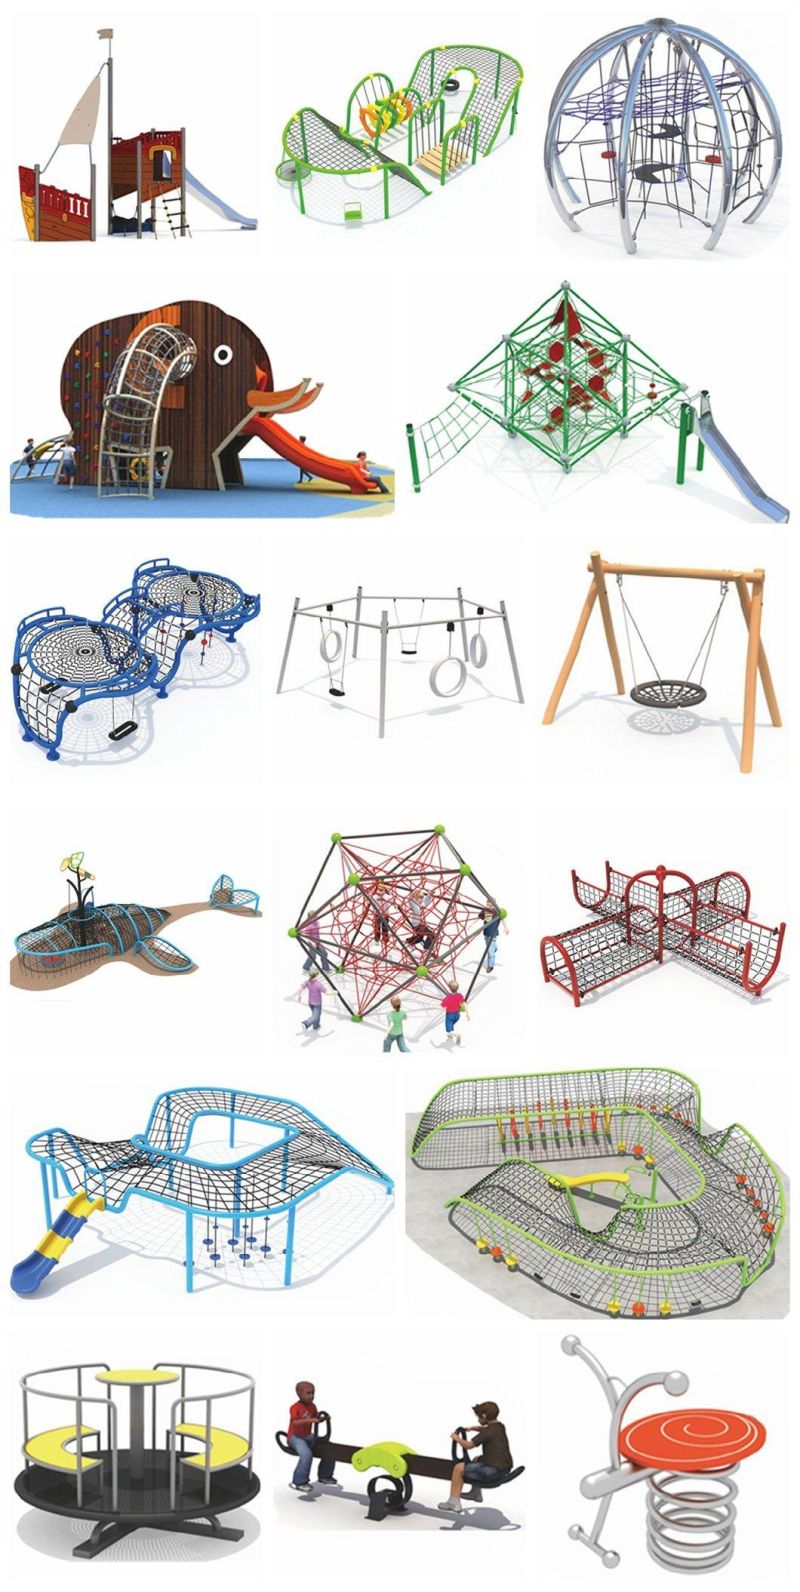 Customized Children′s Outdoor Playground Park House Shape Slide Equipment